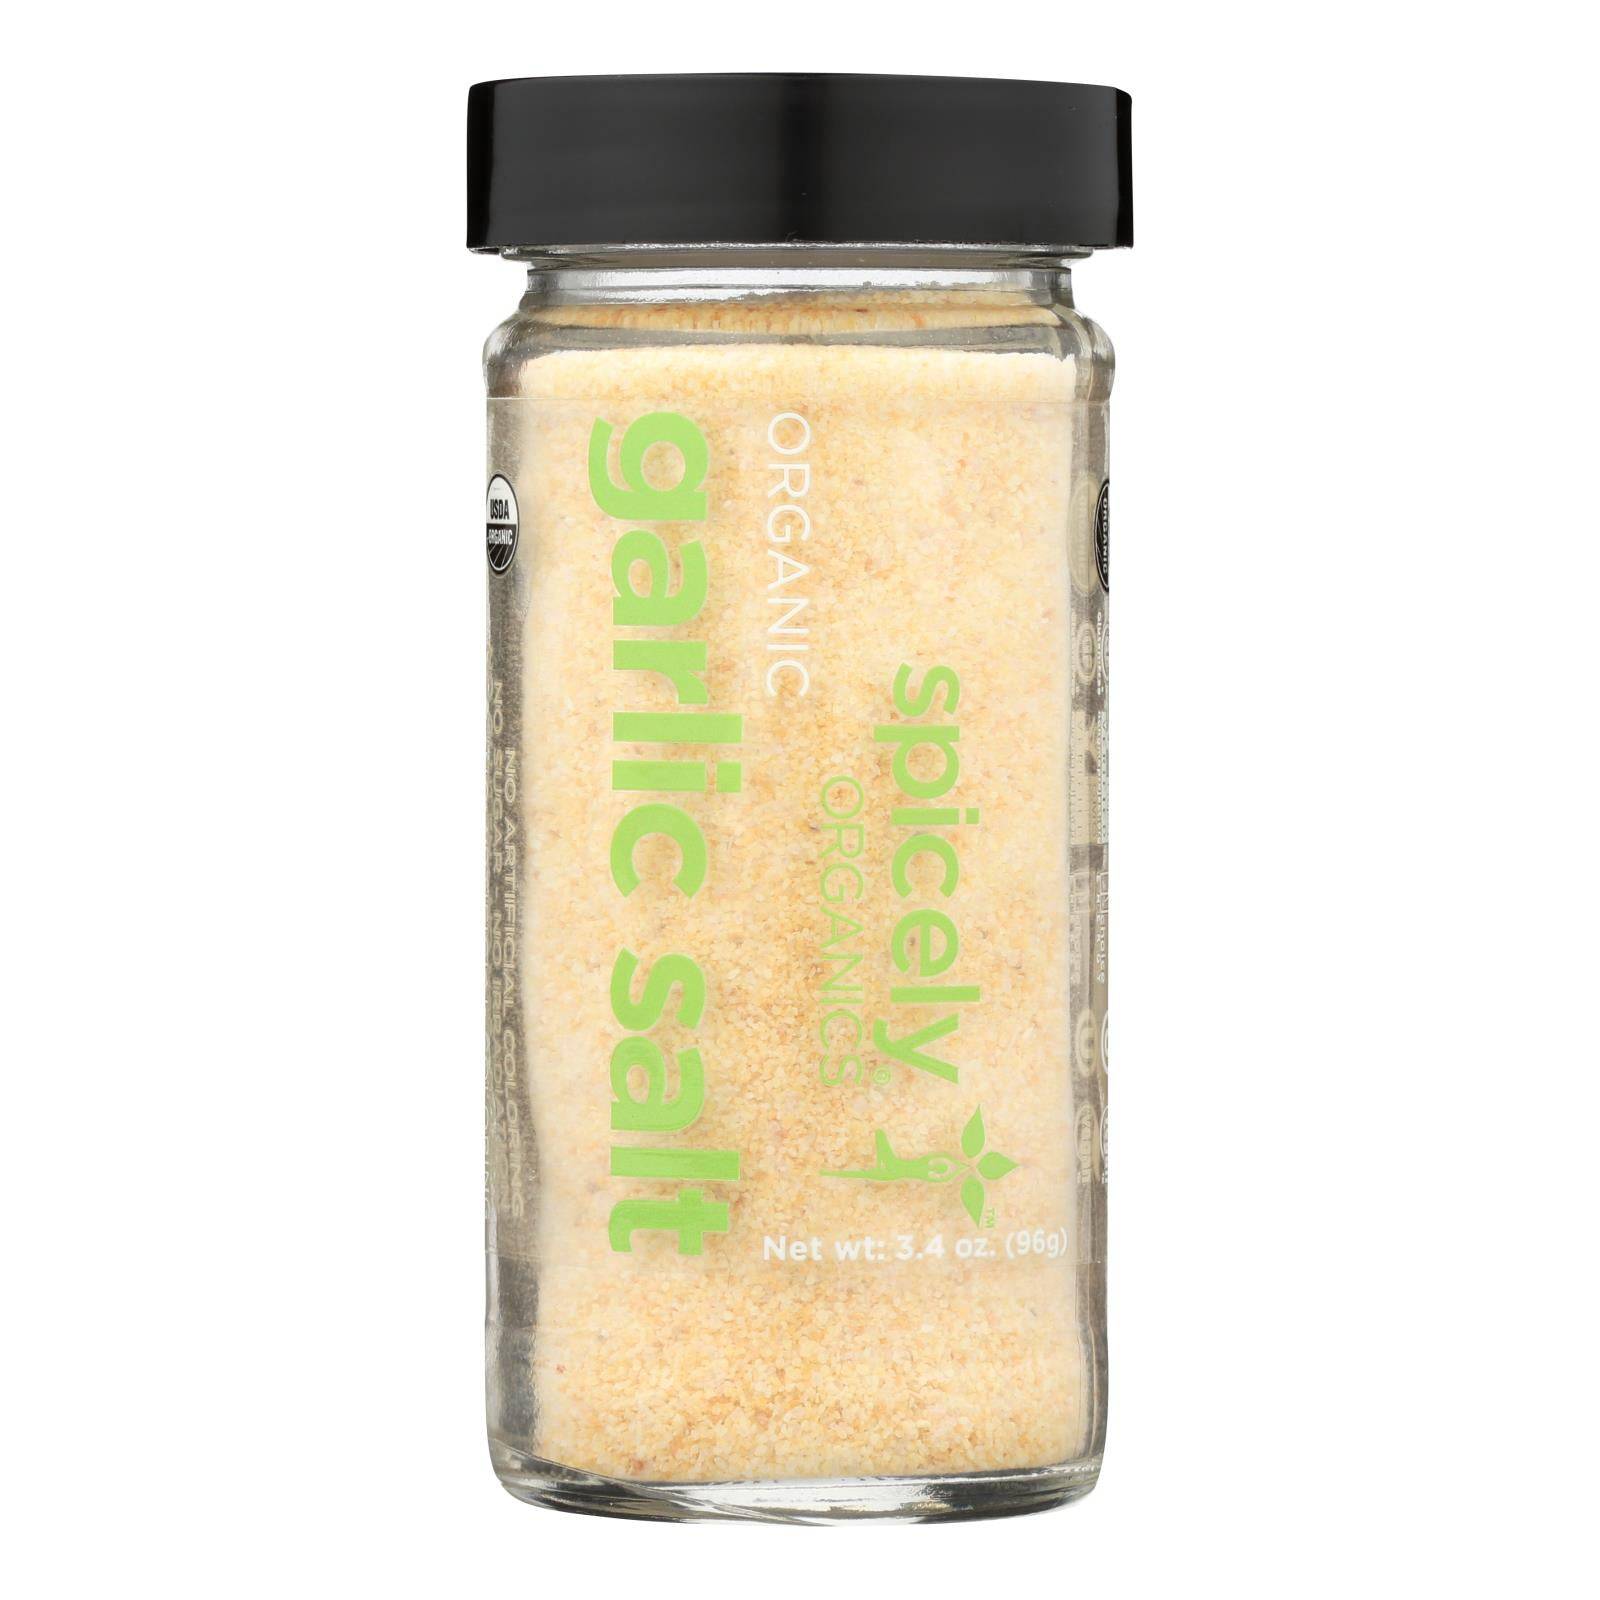 Spicely Organics - Organic Garlic - Seasoning - Case Of 3 - 3.4 Oz. | OnlyNaturals.us